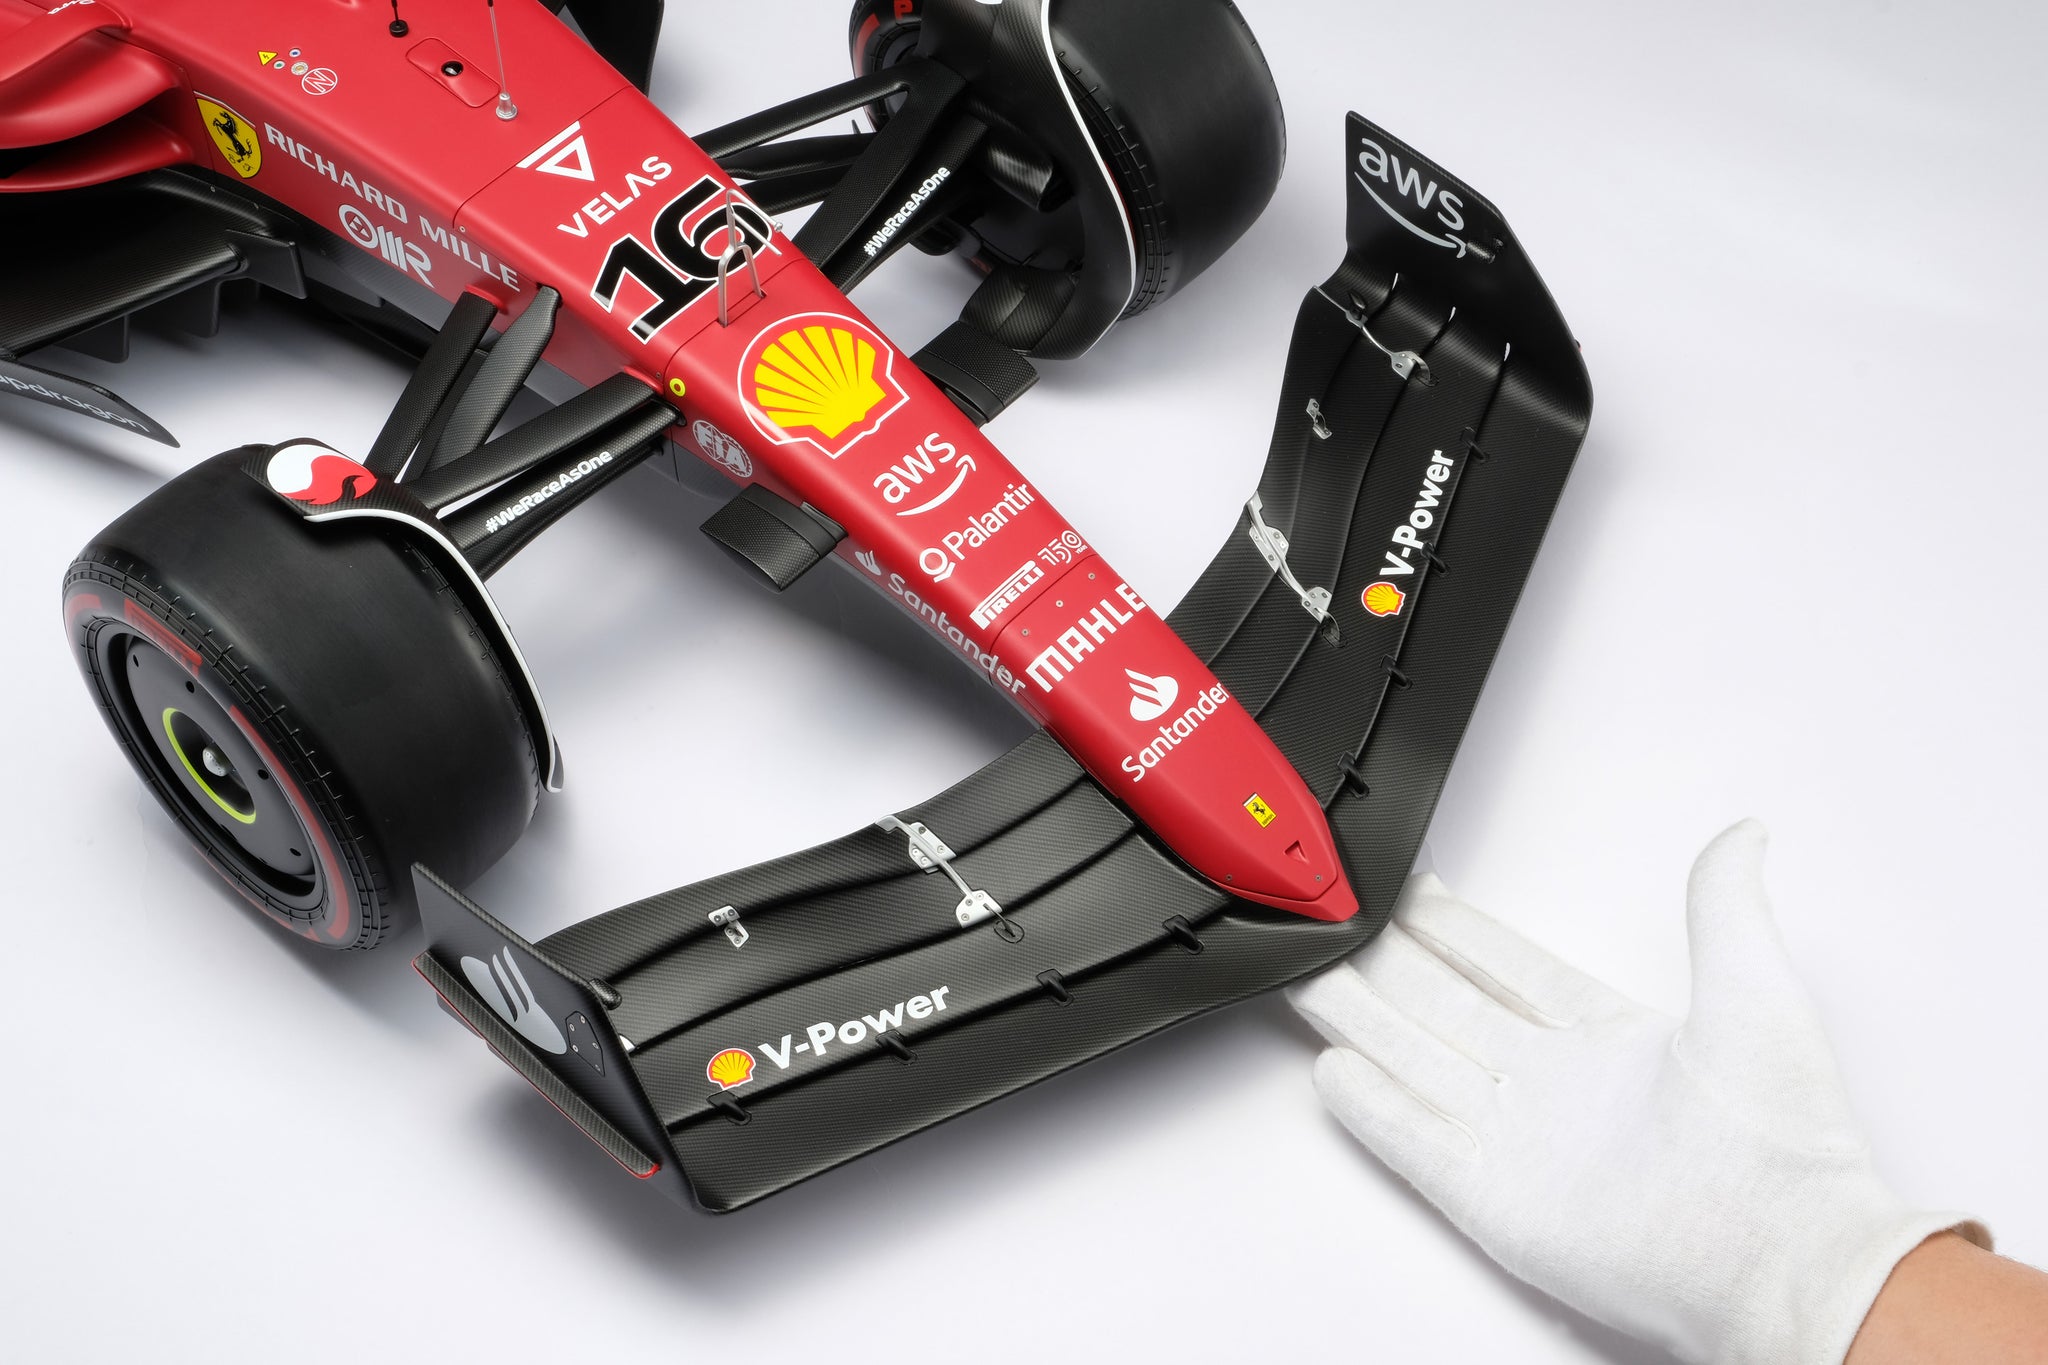 Ferrari F1-75 at 1:5 scale by Amalgam Collection